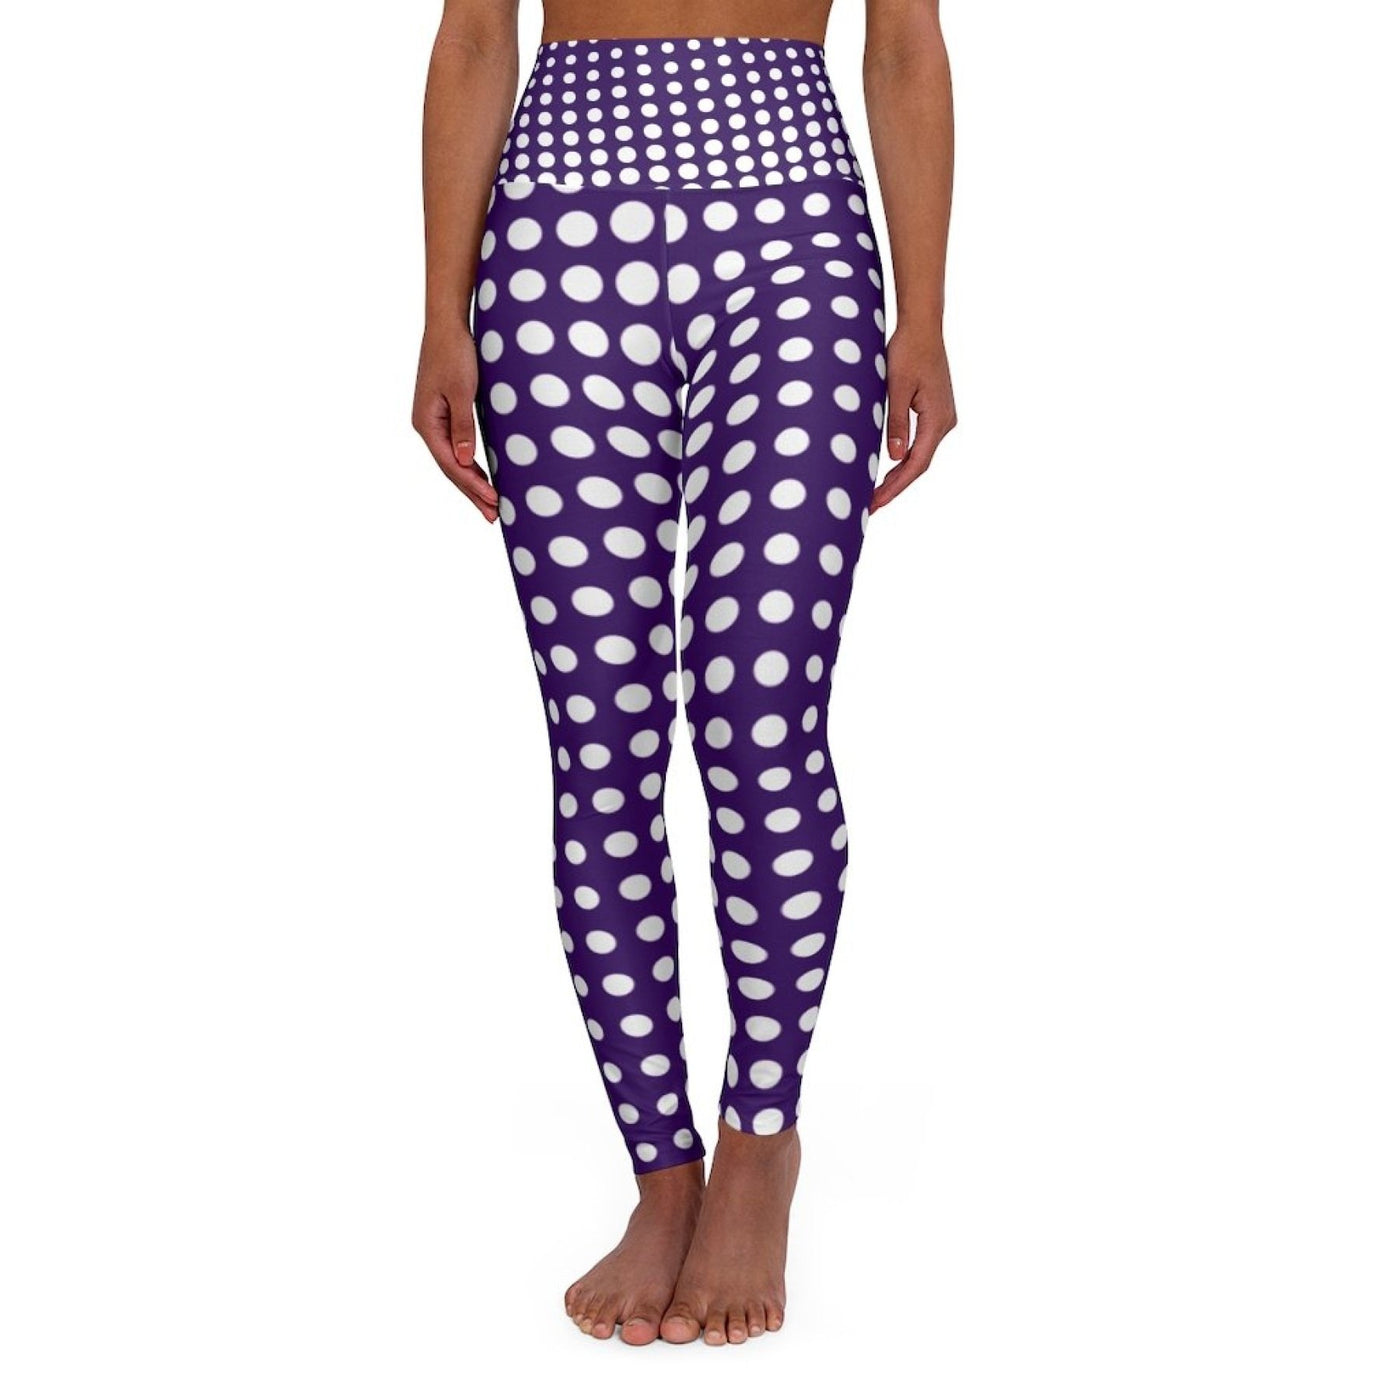 High Waisted Yoga Pants Purple And White Polka Dot Style Sports Pants - Womens